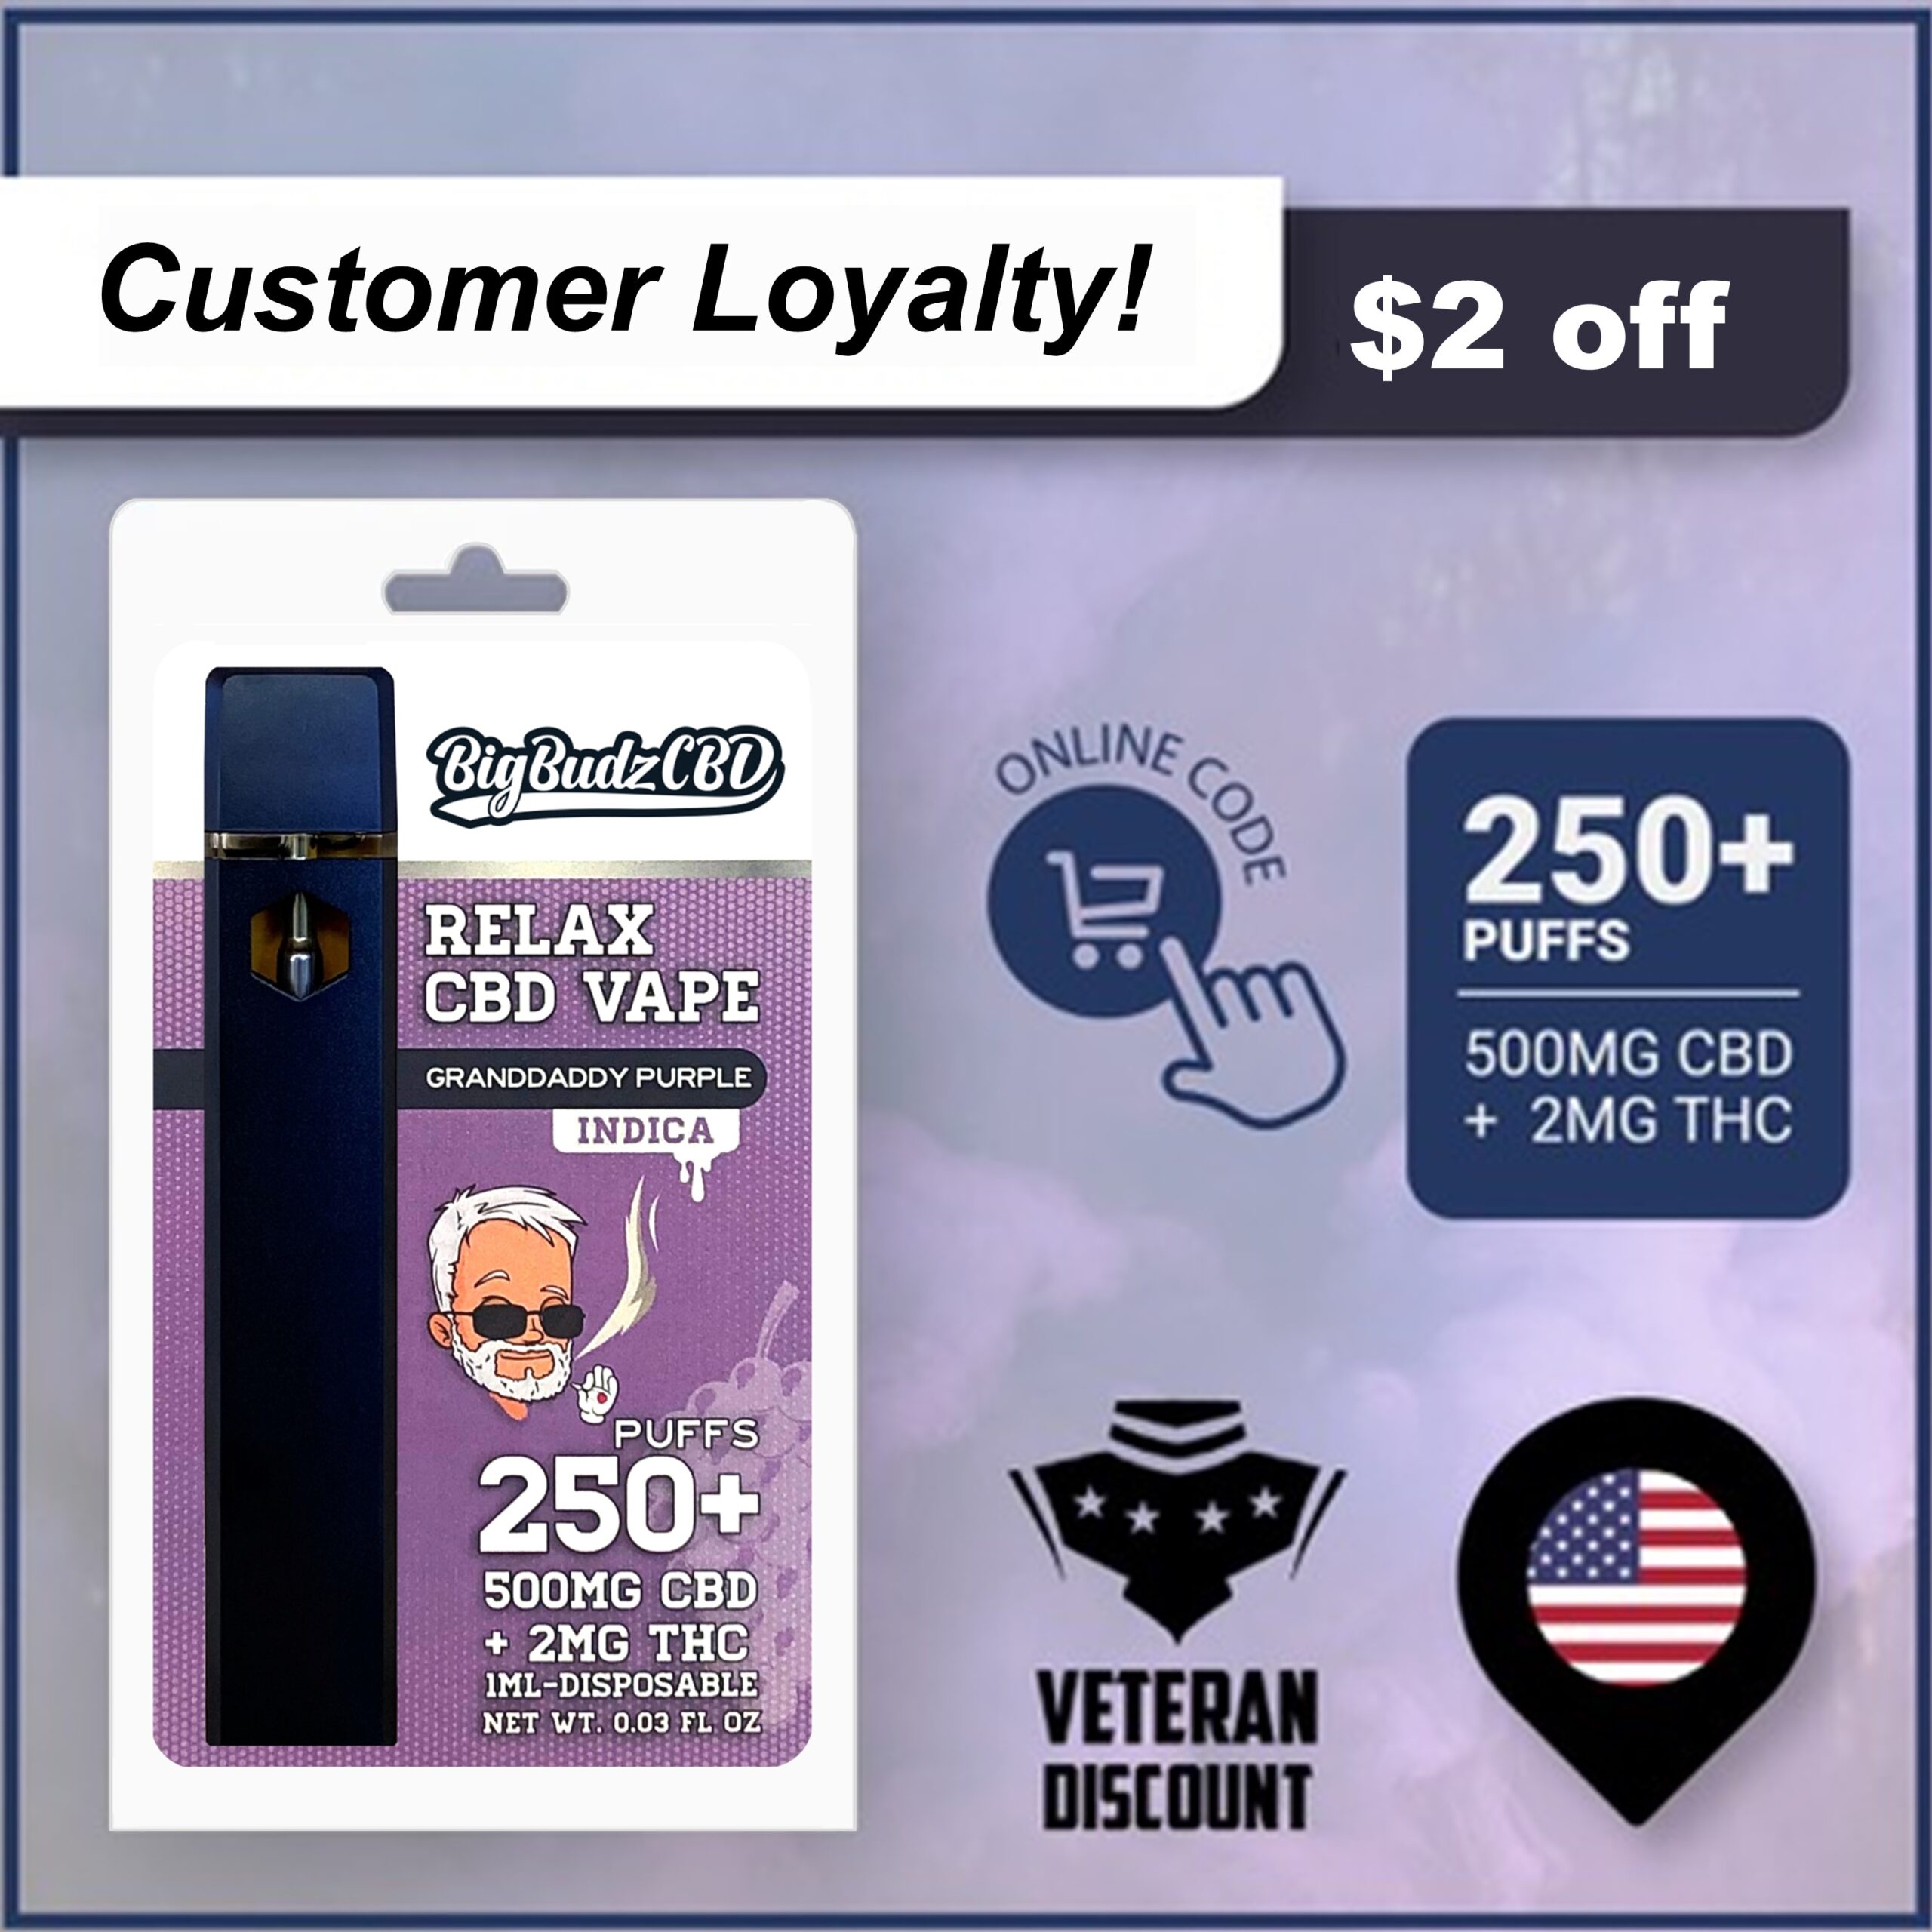 (customer loyalty coupon) Granddaddy Purple vape pen $2 off